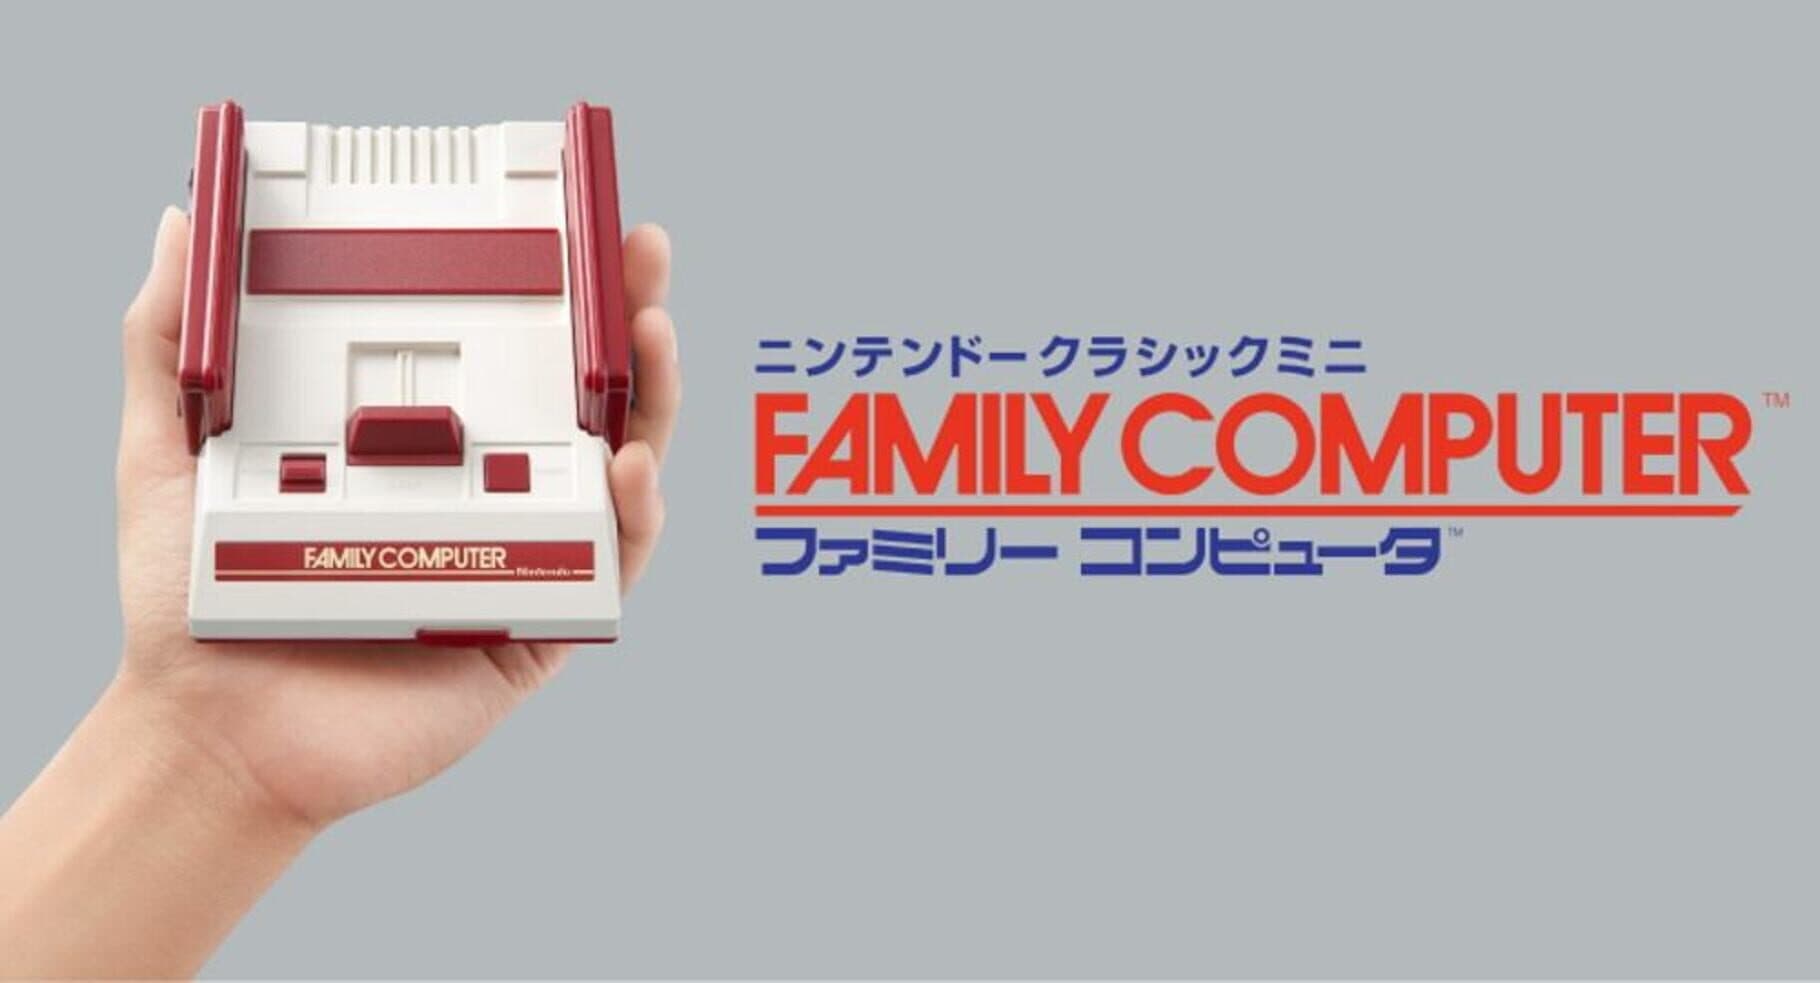 Nintendo Classic Mini: Family Computer Image